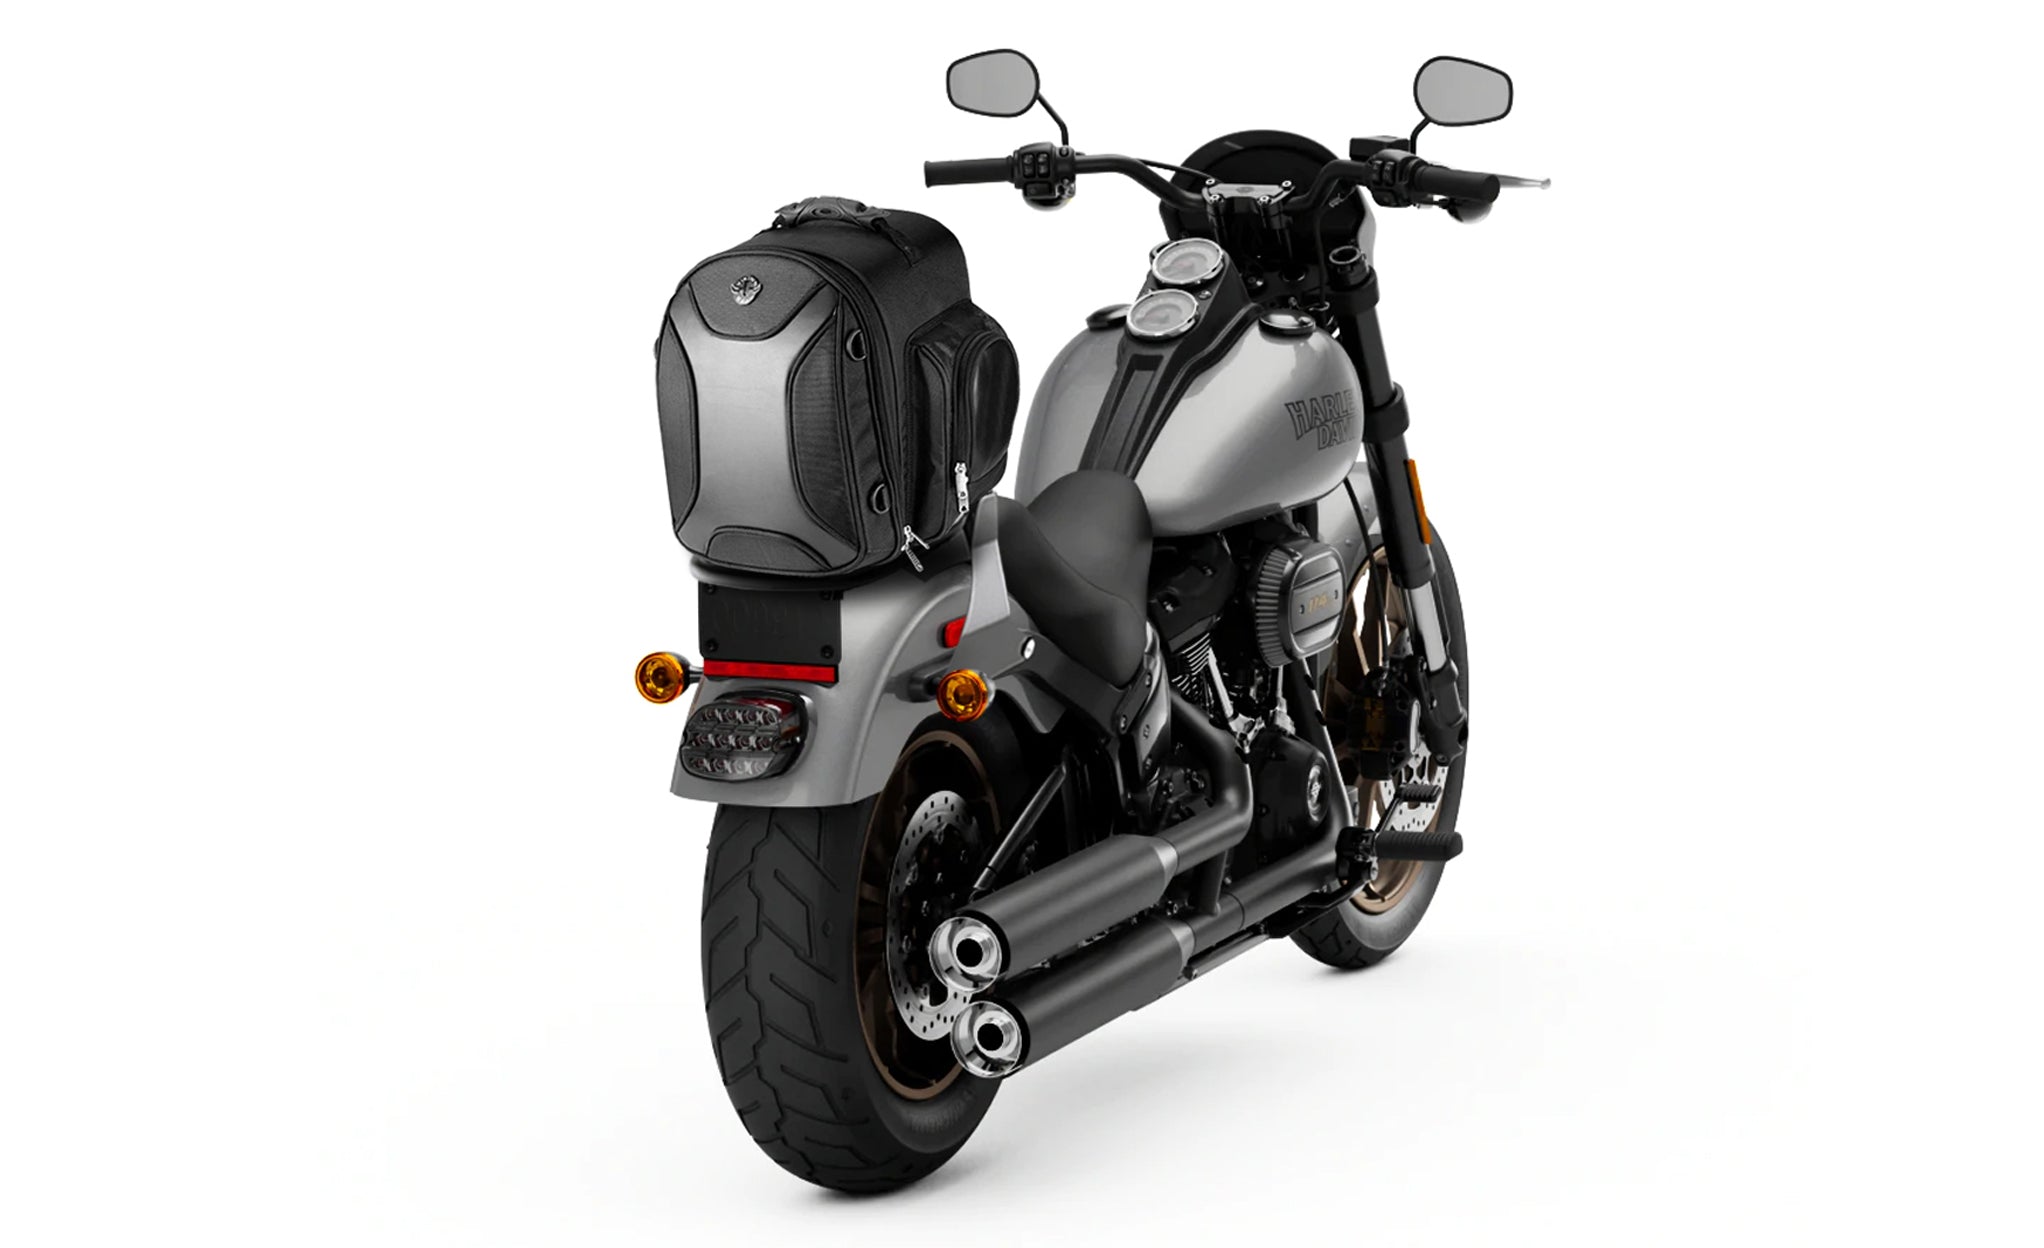 Viking Dagr Small Victory Motorcycle Sissy Bar Bag Bag on Bike View @expand